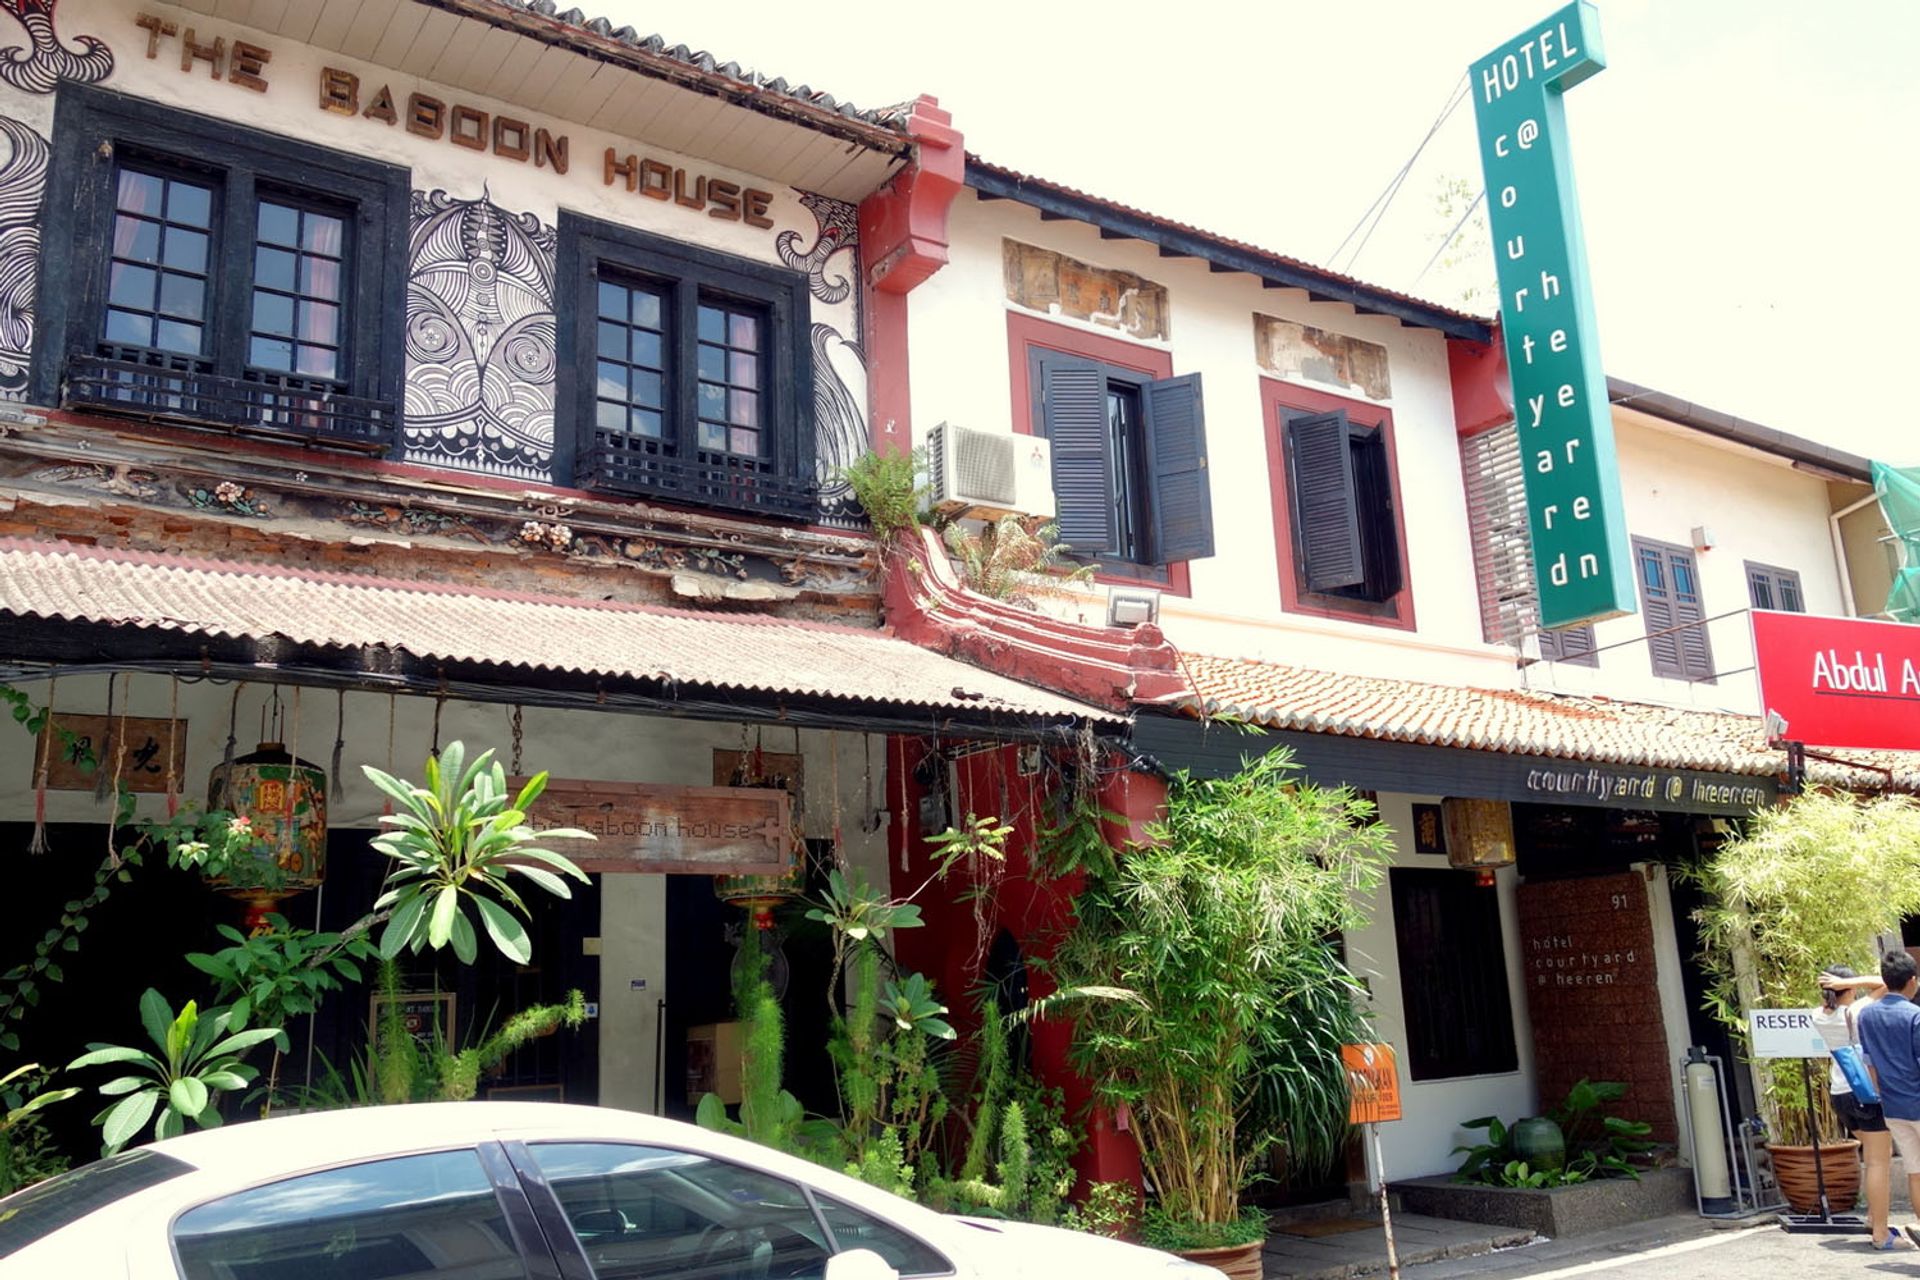 Courtyard @ Heeren Boutique Hotel, Melaka